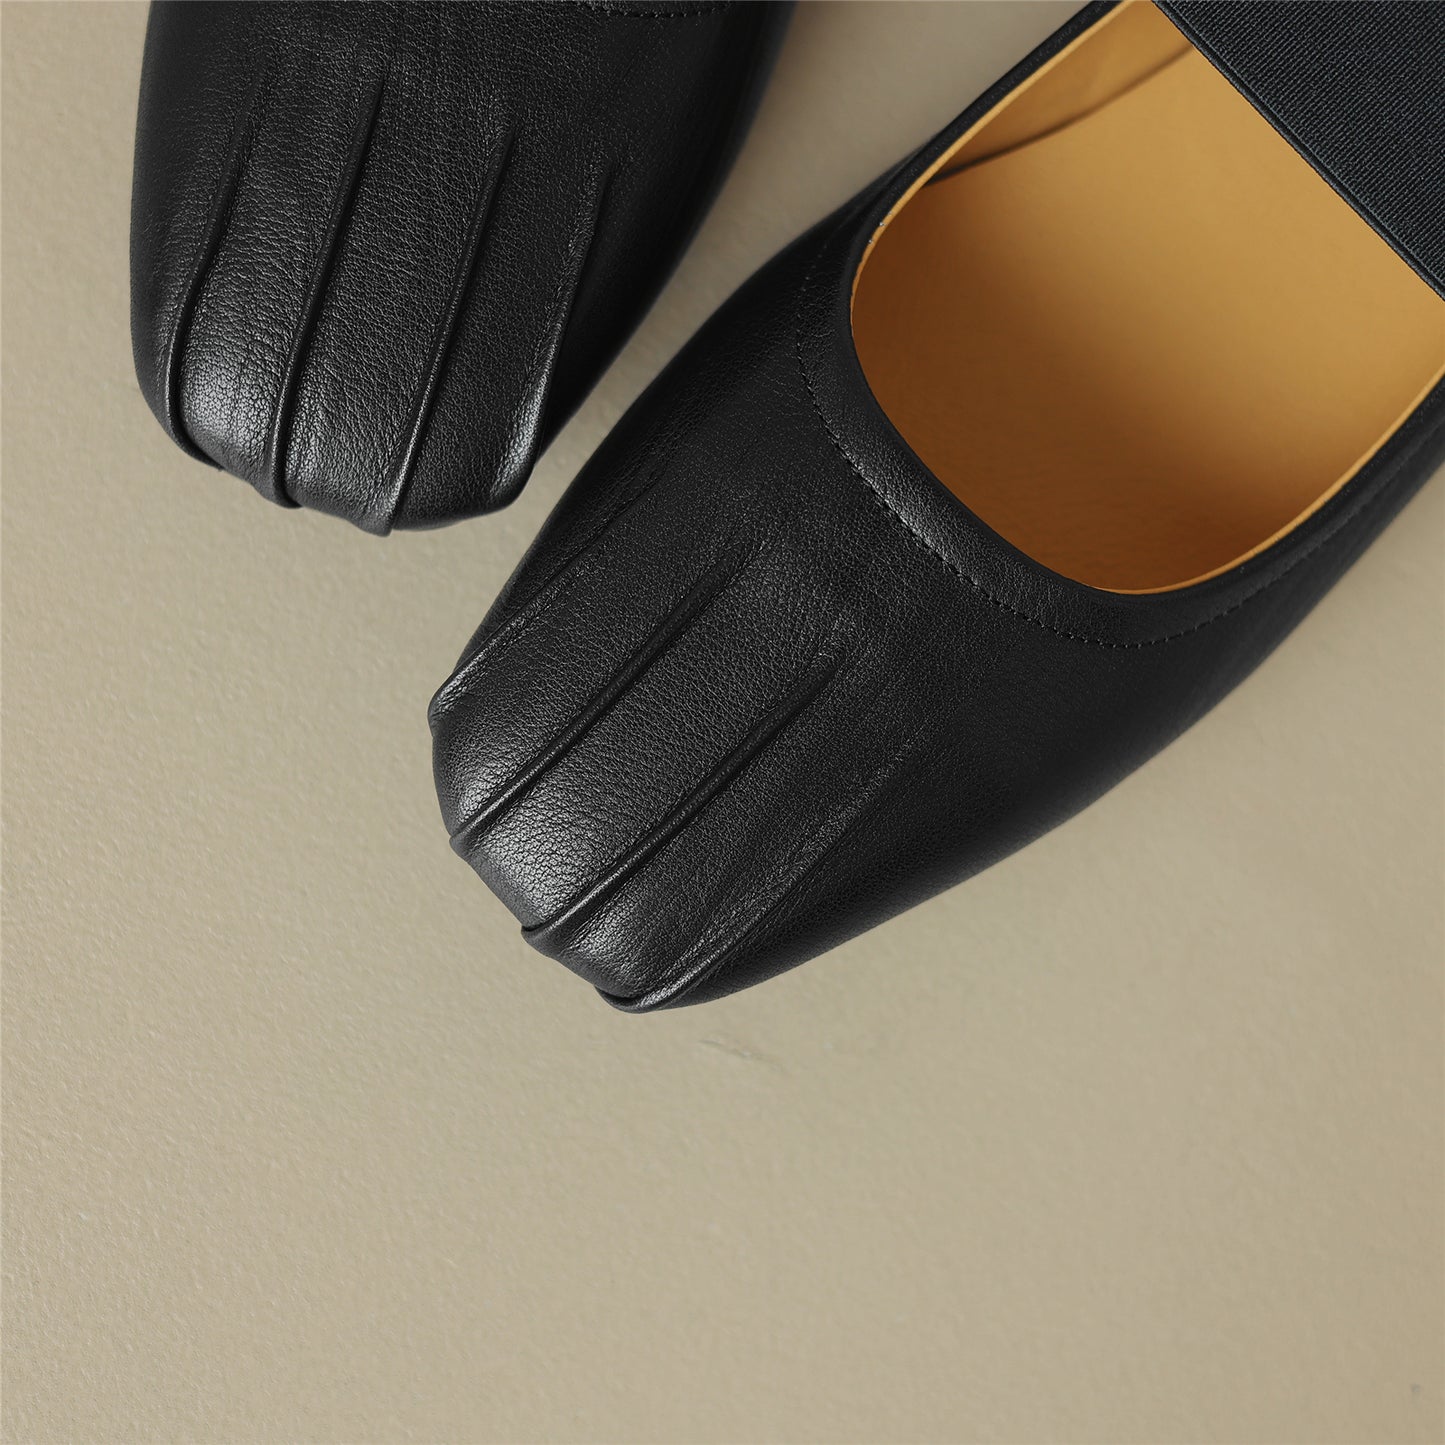 TinaCus Handmade Women's Genuine Leather Square Toe Mary Jane Flats